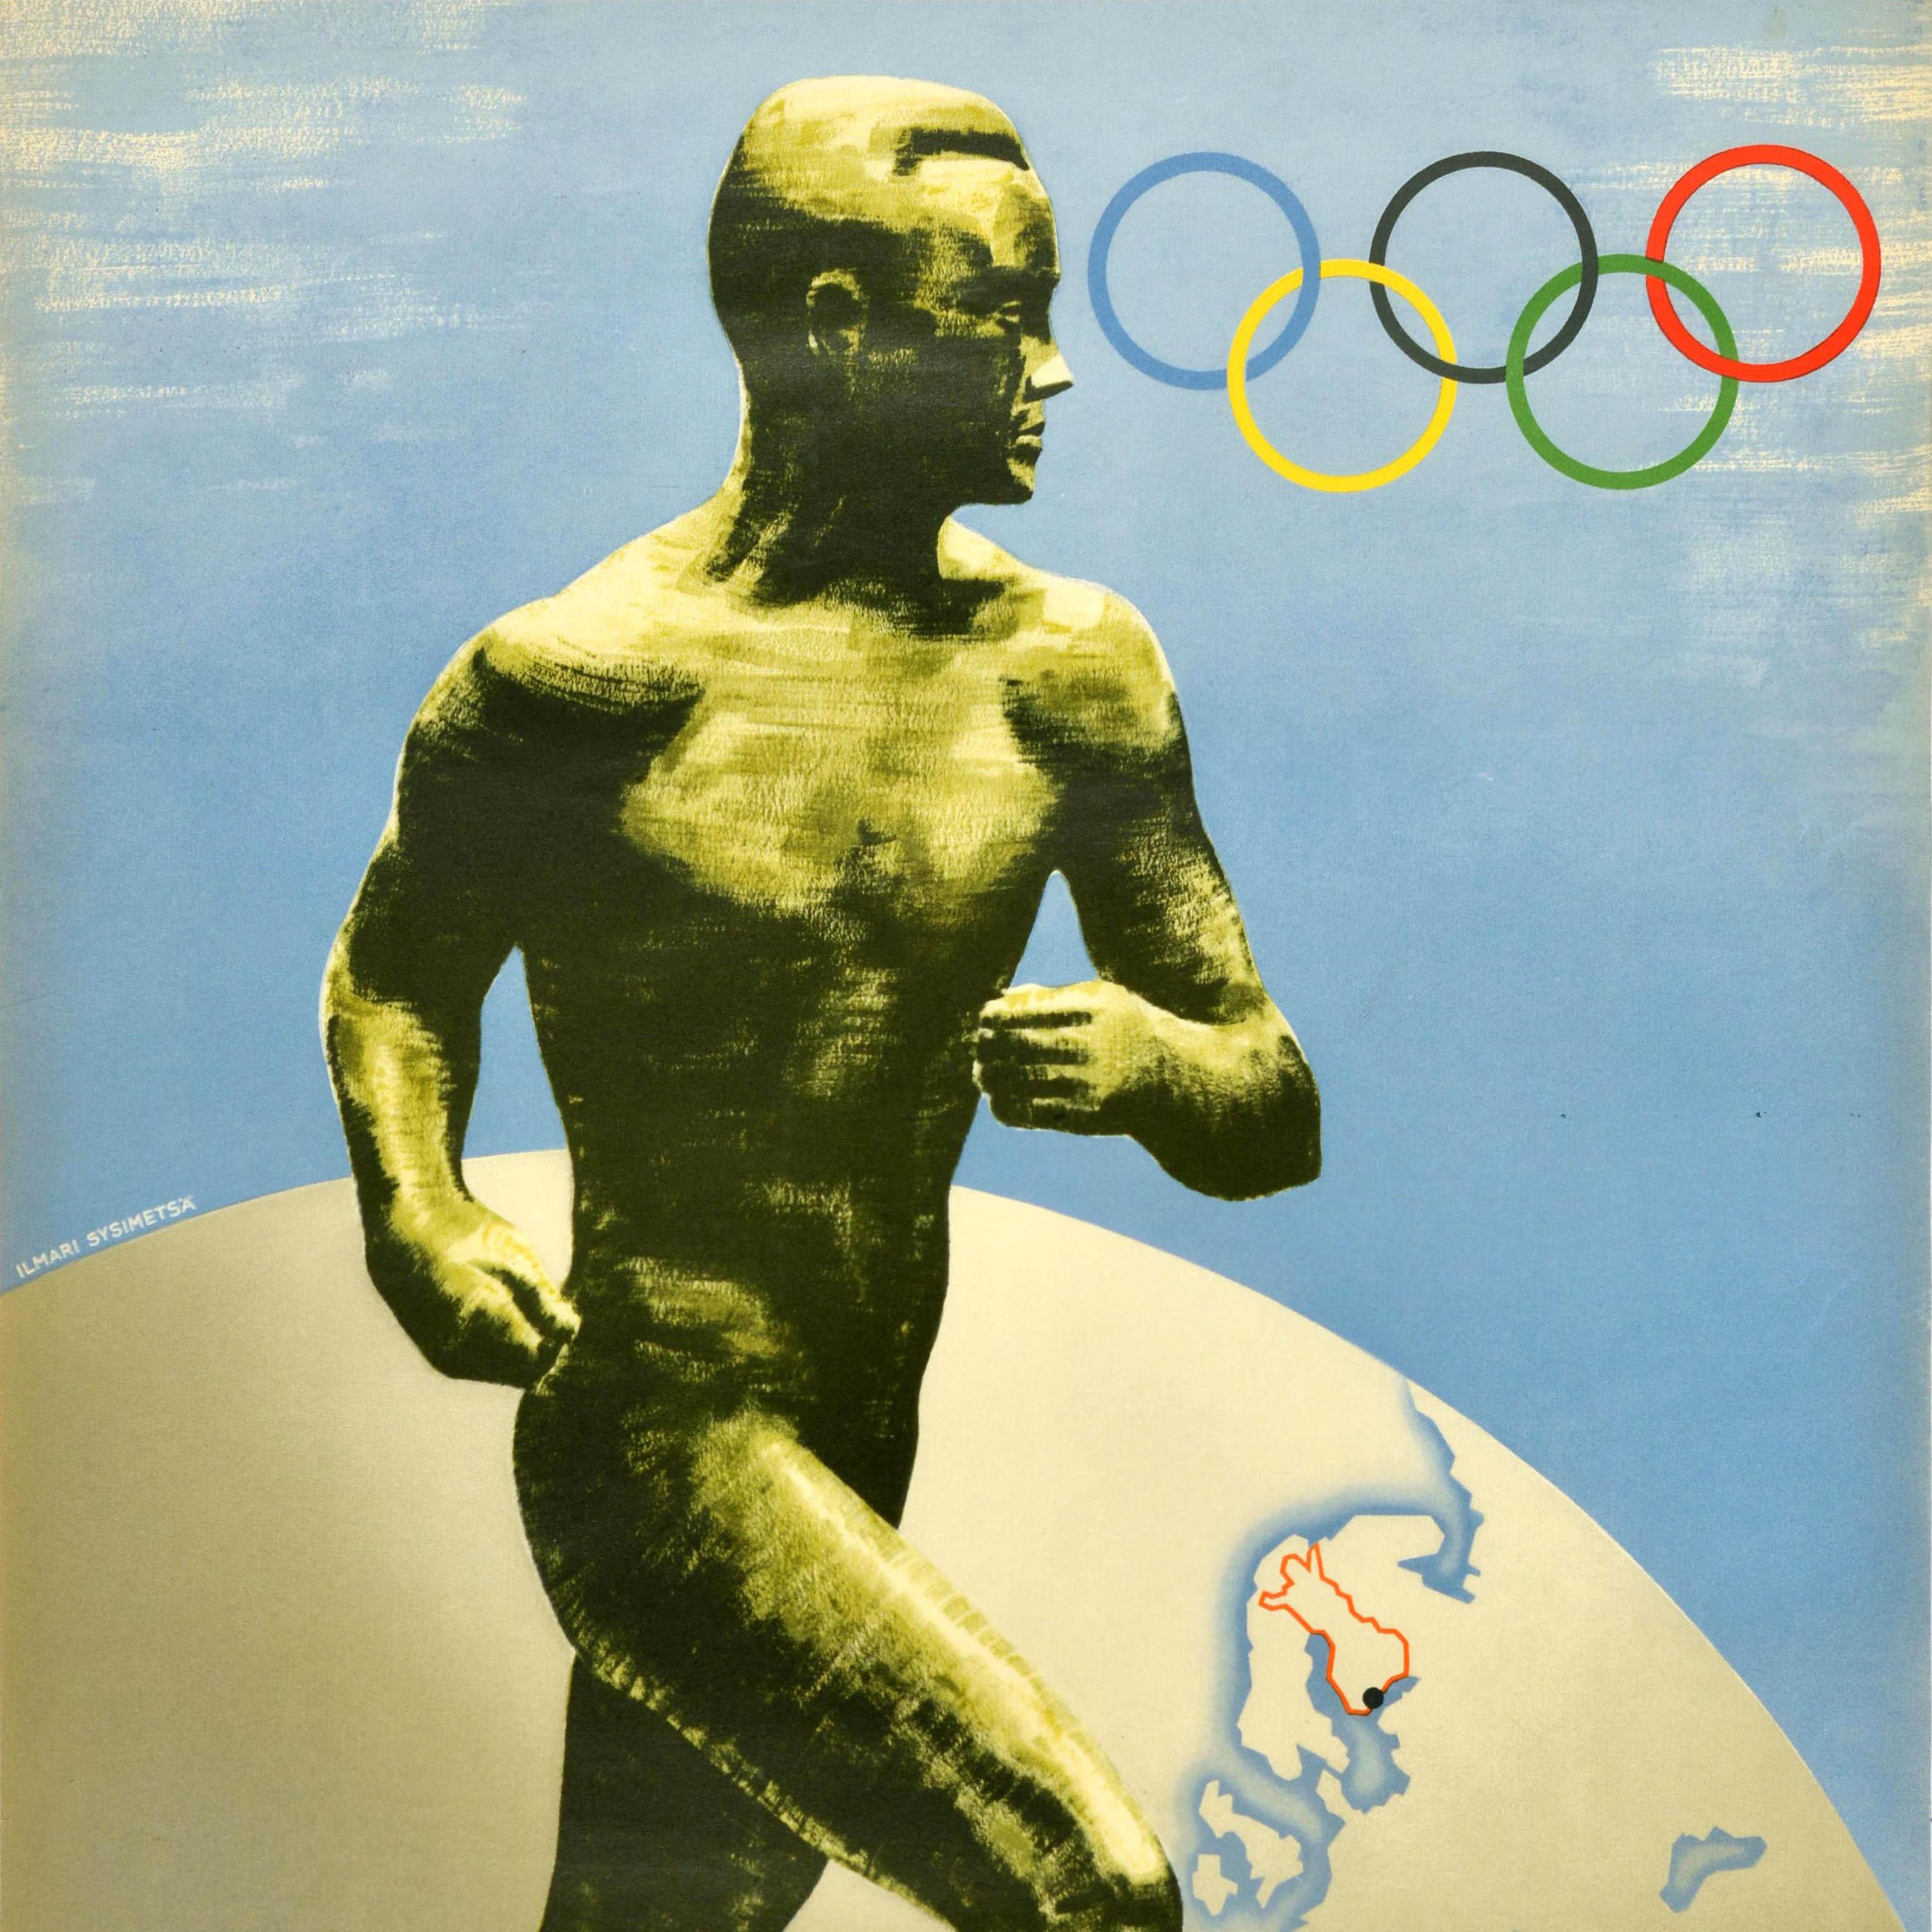 Original Vintage Sports Poster Olympic Games Helsinki 1940 Finland Athlete - Print by Ilmari Sysimetsa